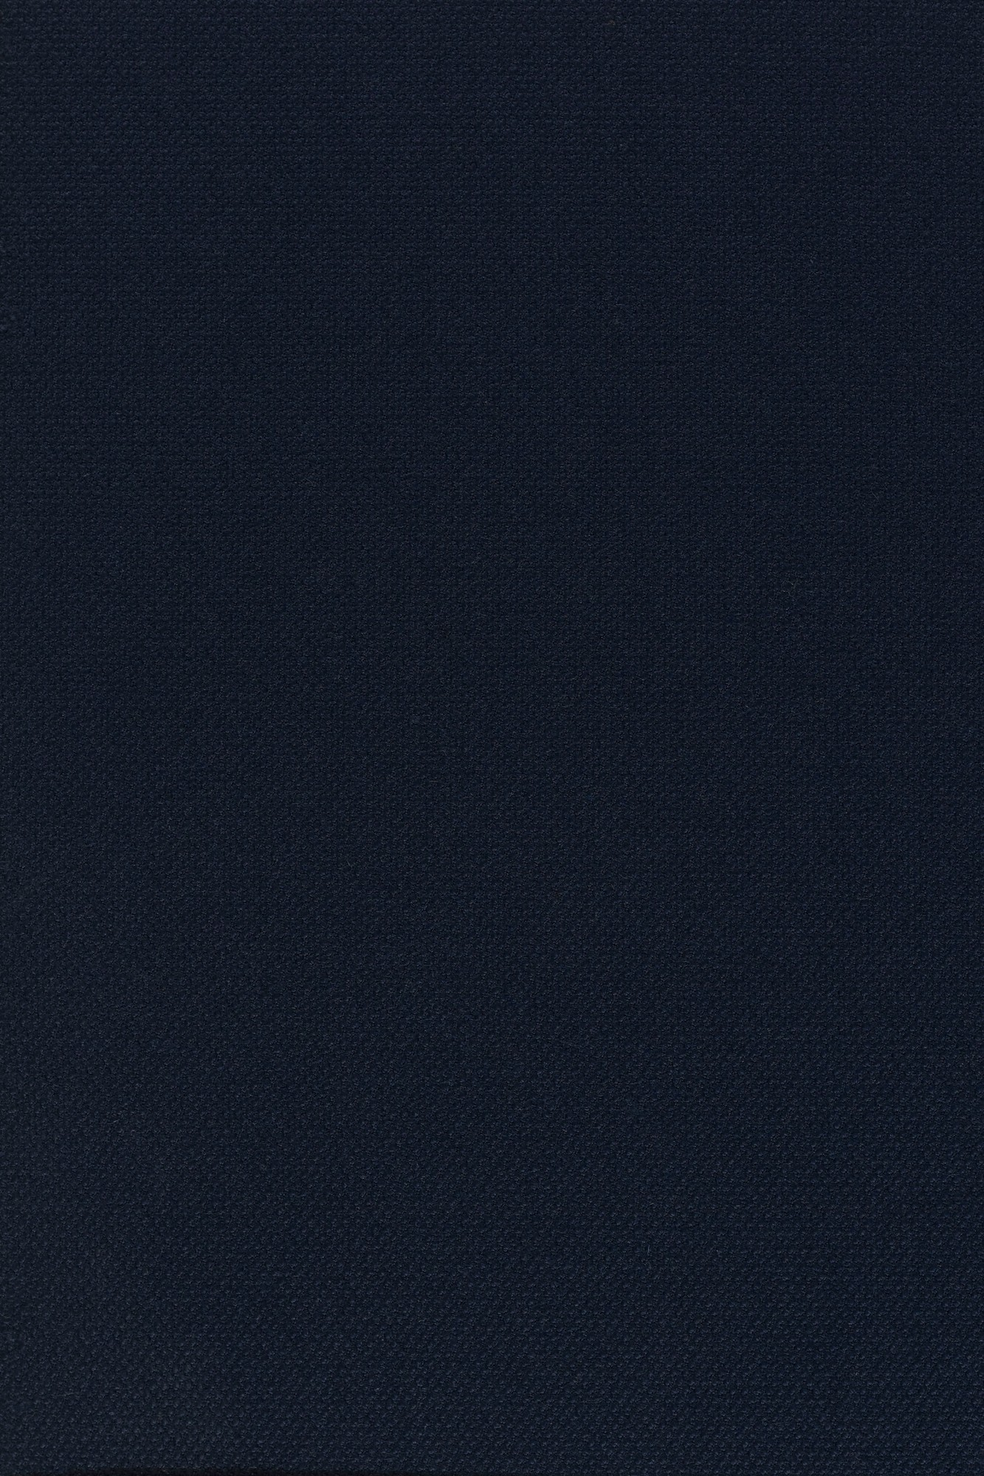 Fabric sample Steelcut 2 775 blue